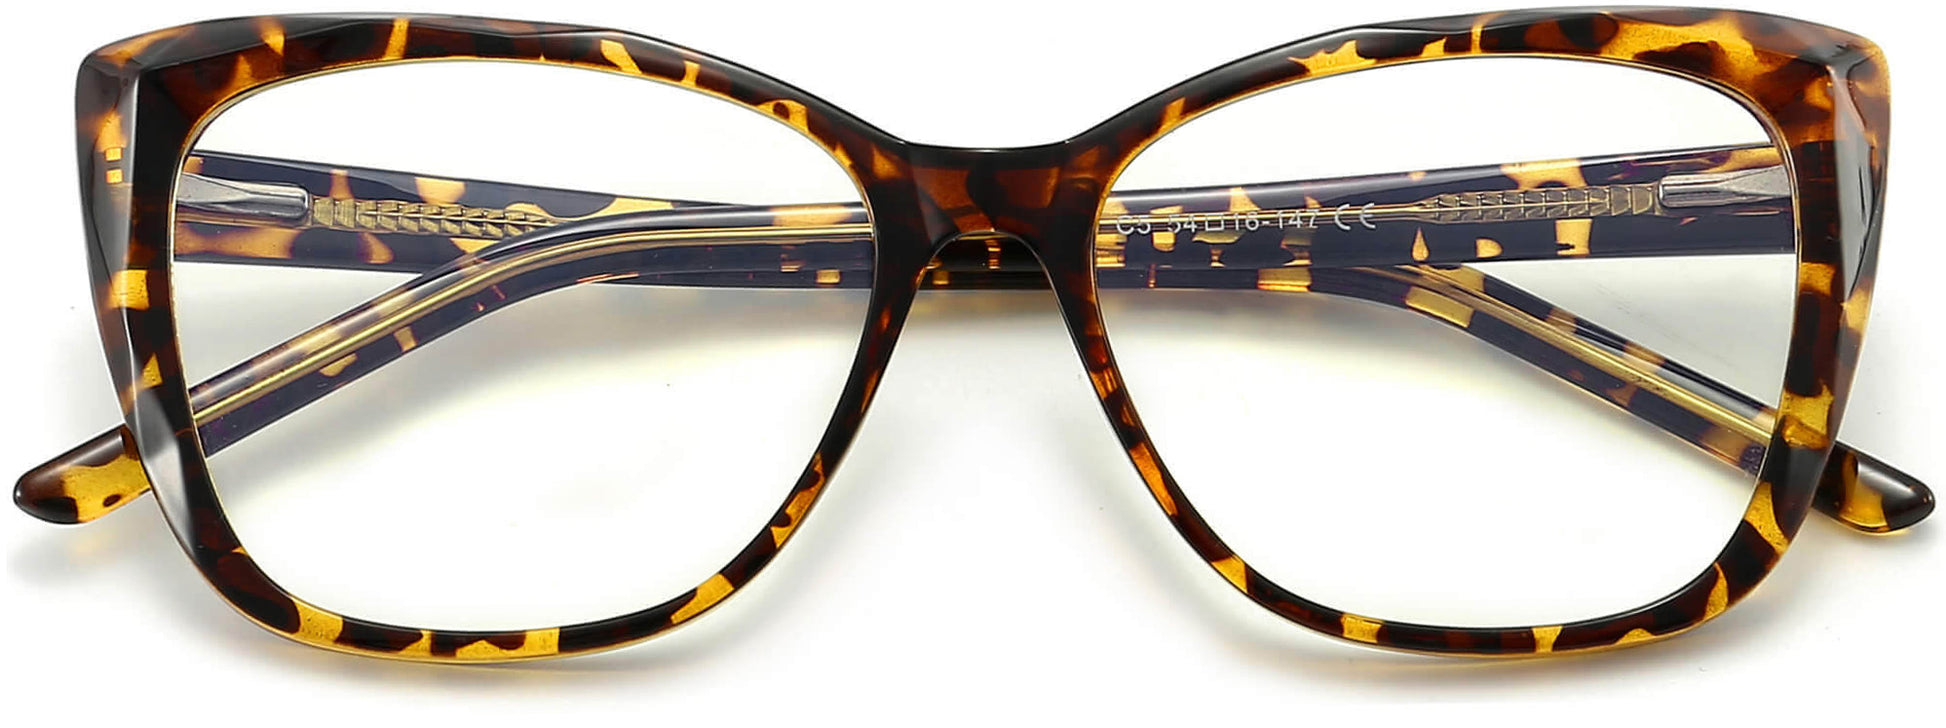 Bonnie Cateye Tortoise Eyeglasses from ANRRI, closed view